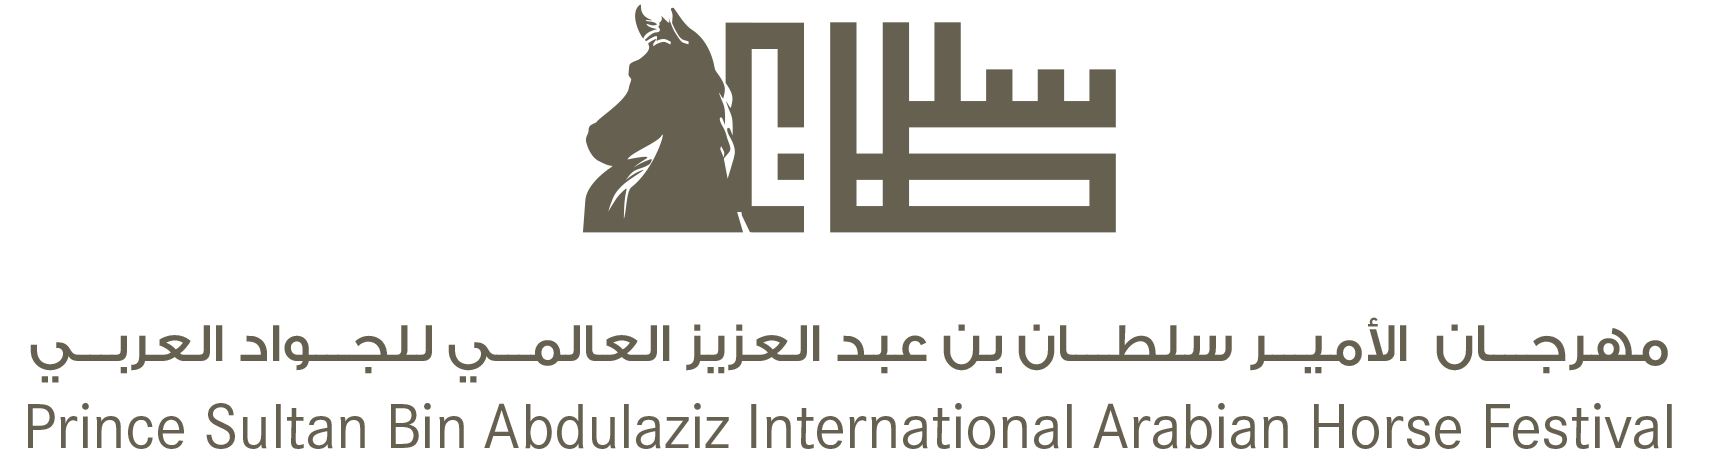 Prince Sultan bin Abdulaziz Arabian Horse Festival